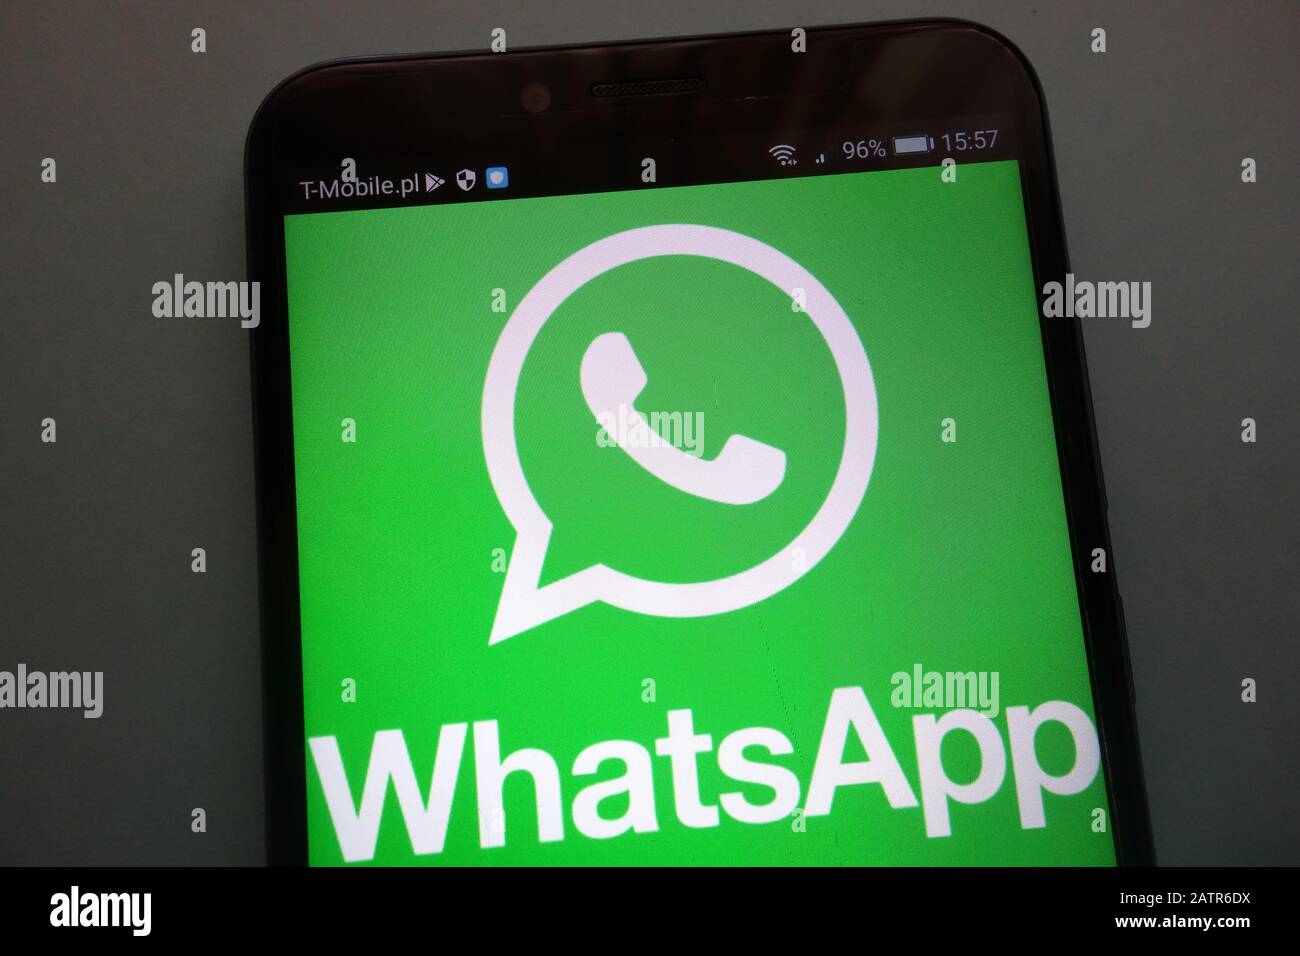 WhatsApp logo on smartphone Stock Photo